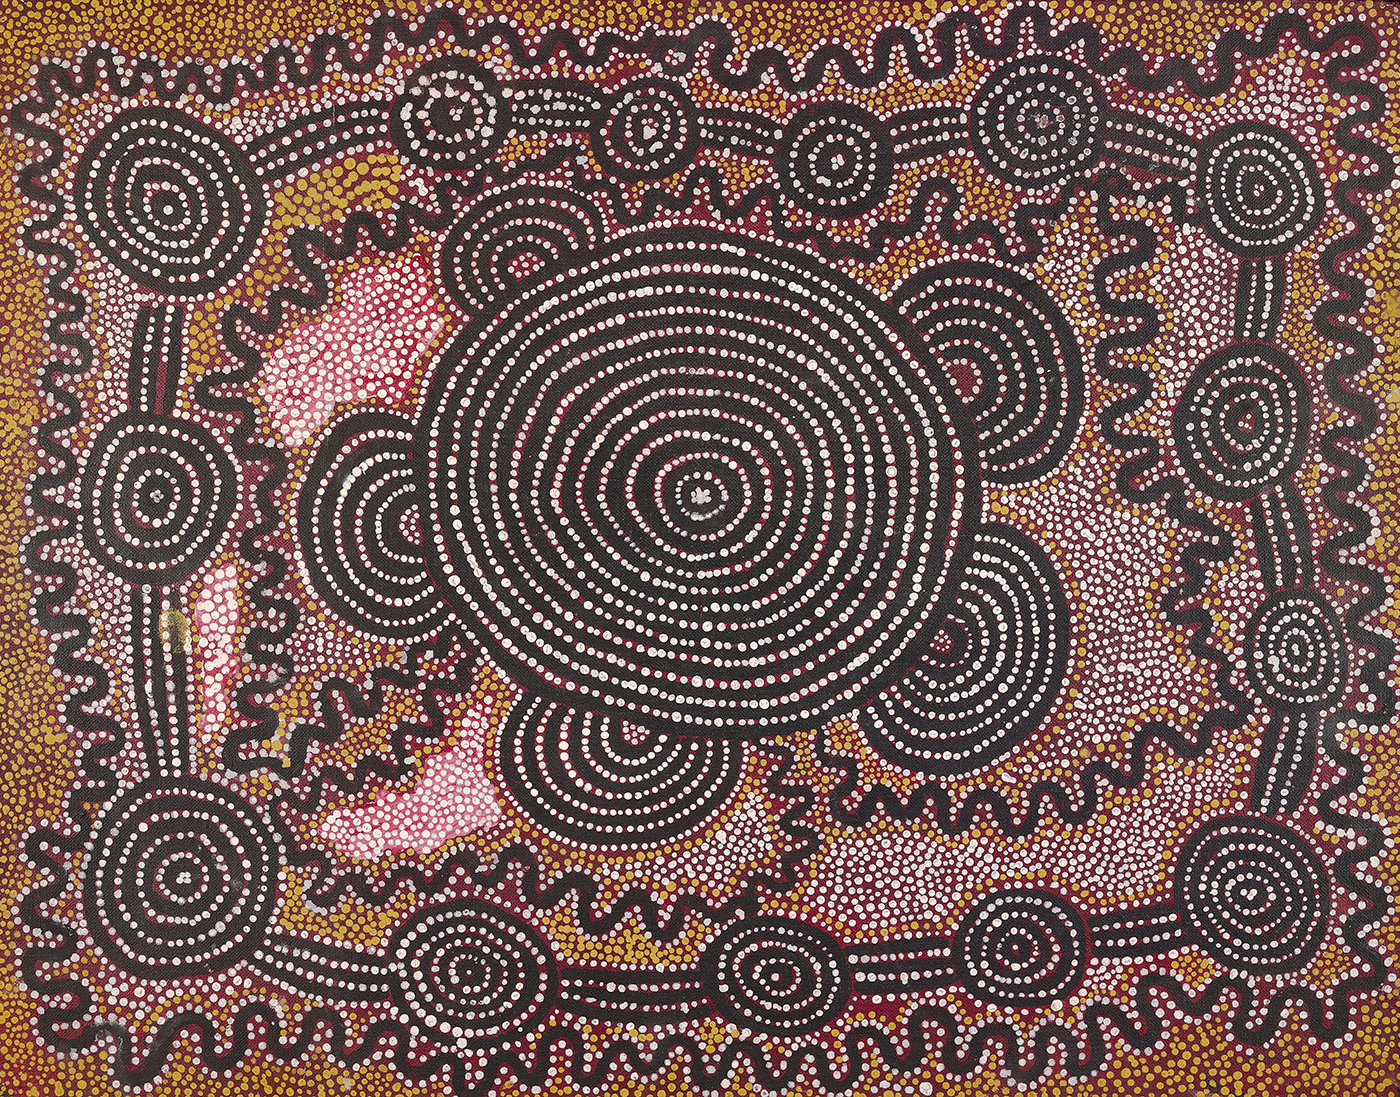 Aboriginal painting.